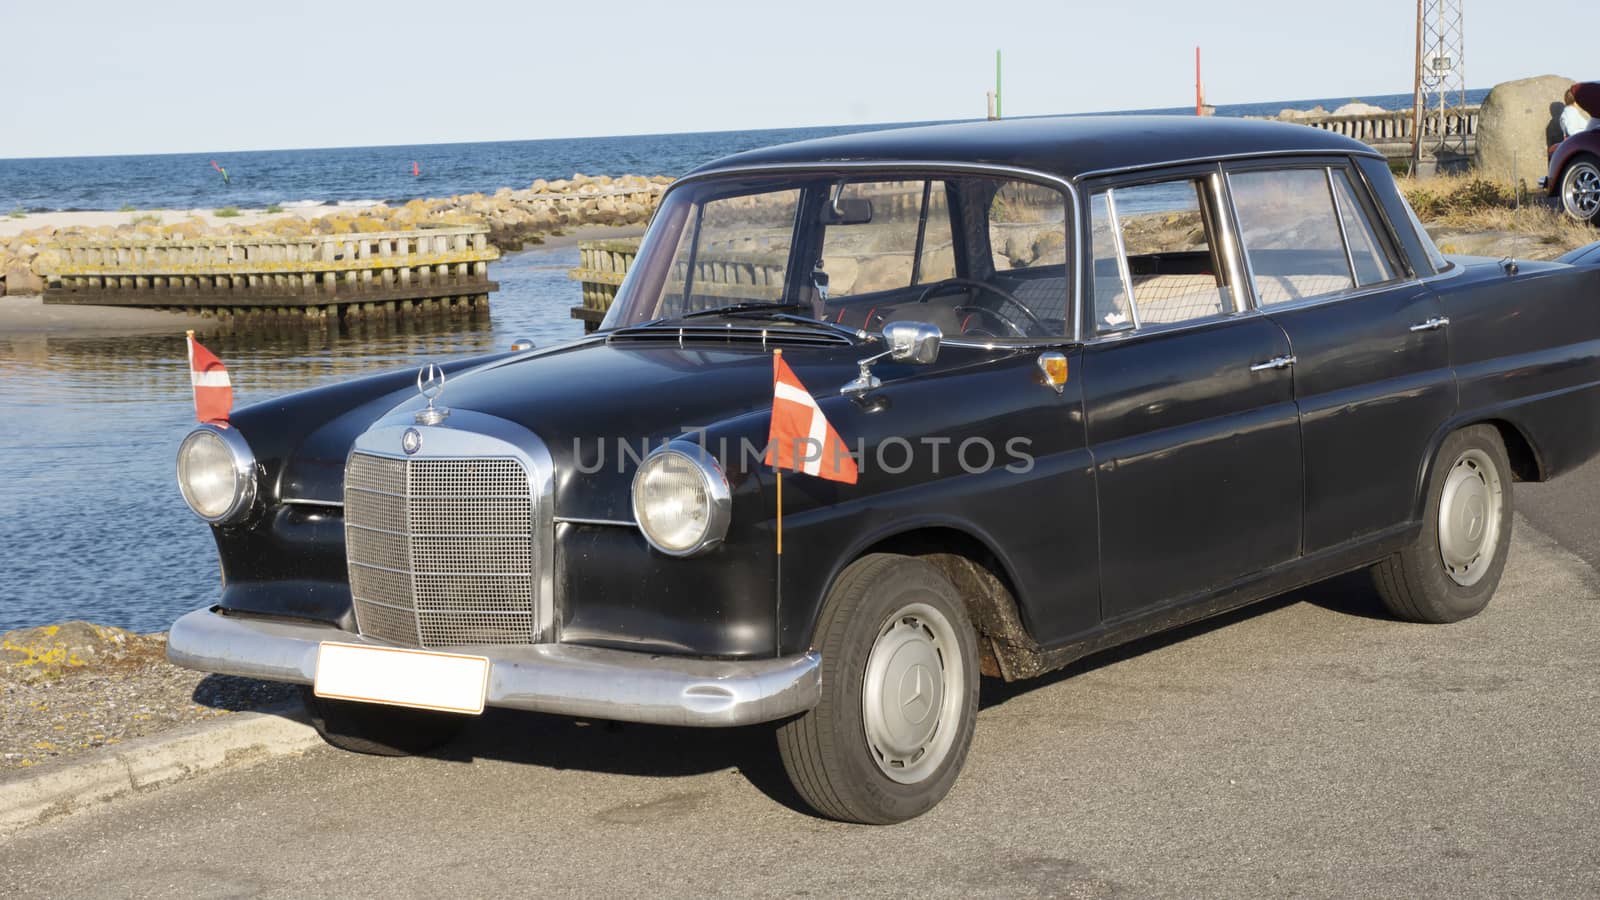 Classic old Cars in Denmark